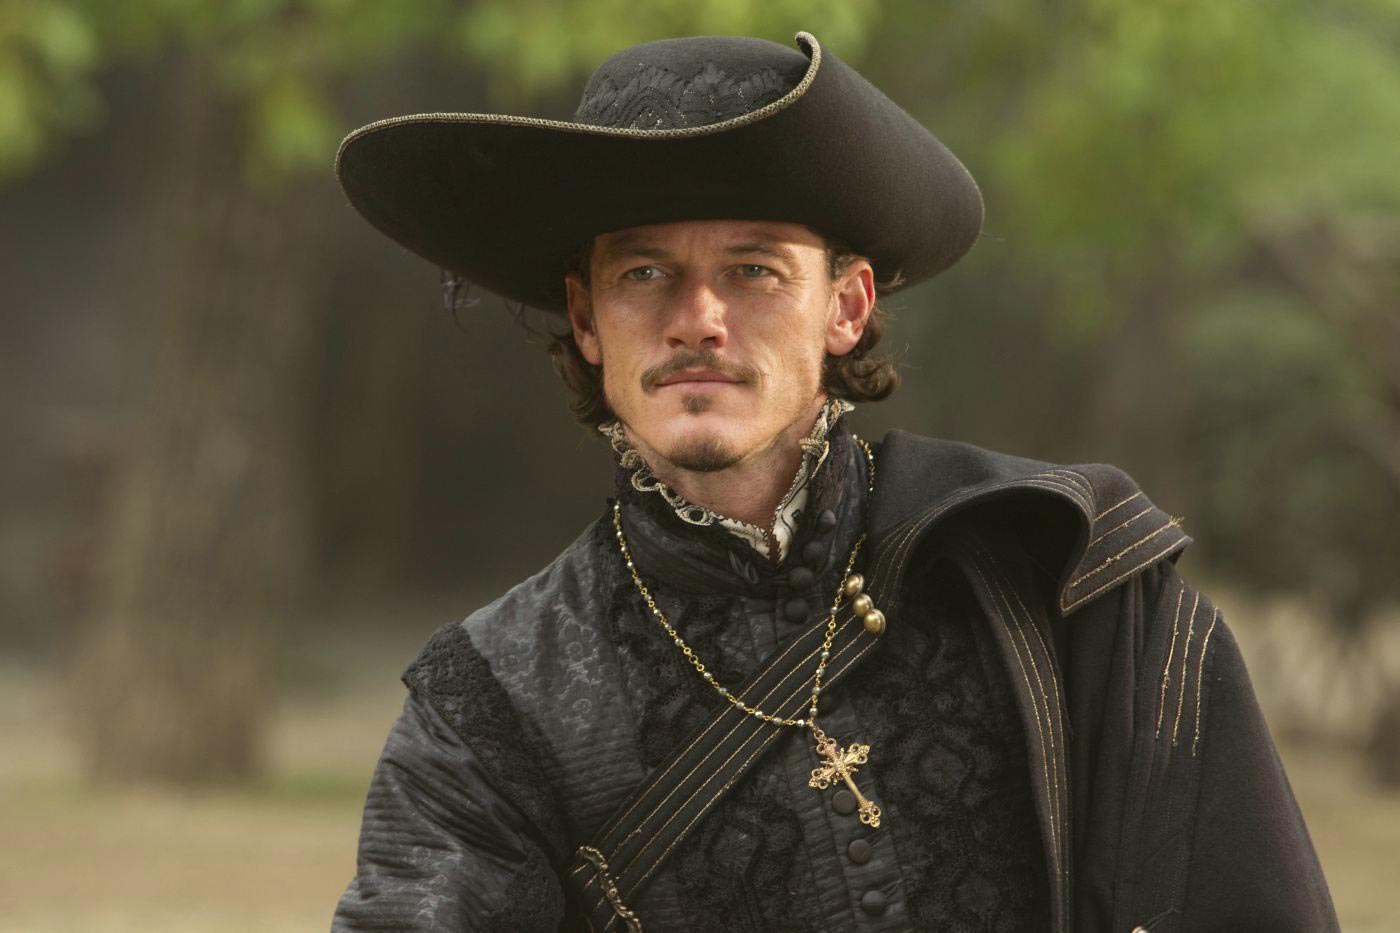 Orlando Bloom as Duke of Buckingham in The Three Musketeers (2011)